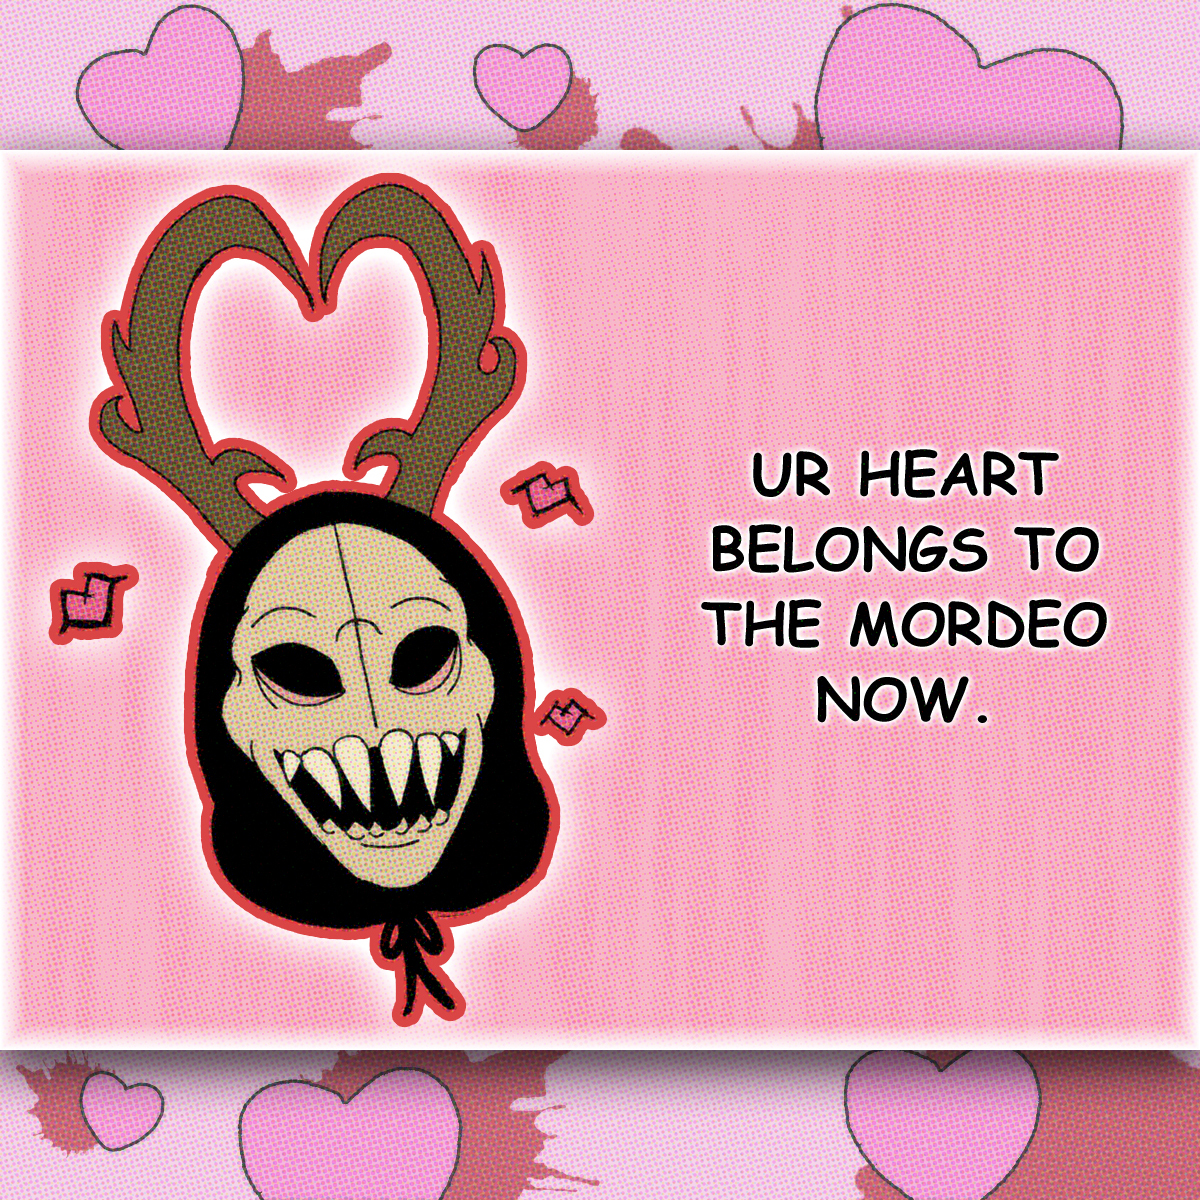 heart - Ur Heart Belongs To The Mordeo Now!